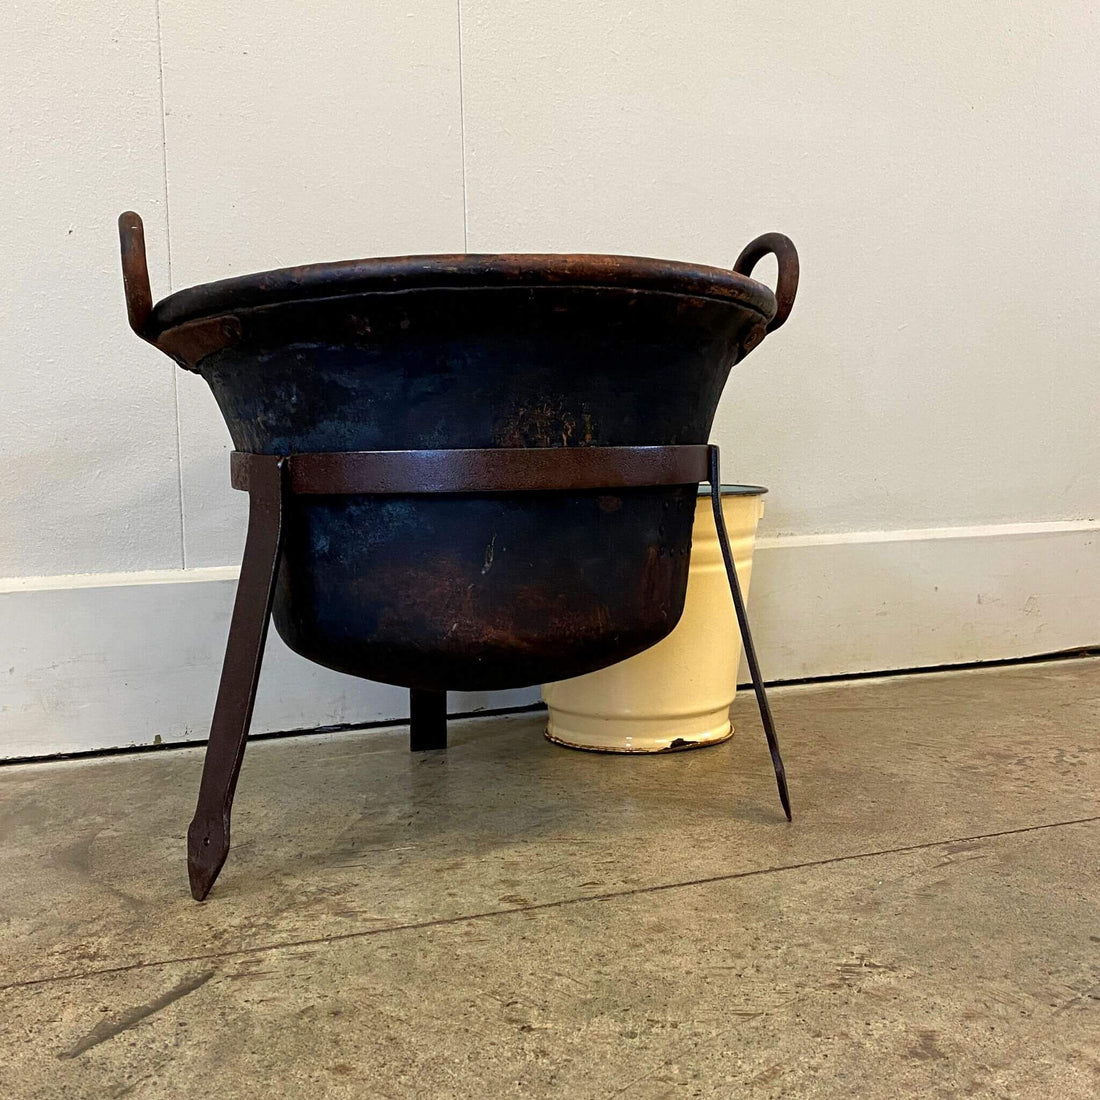 Hand Beaten Copper Cauldron